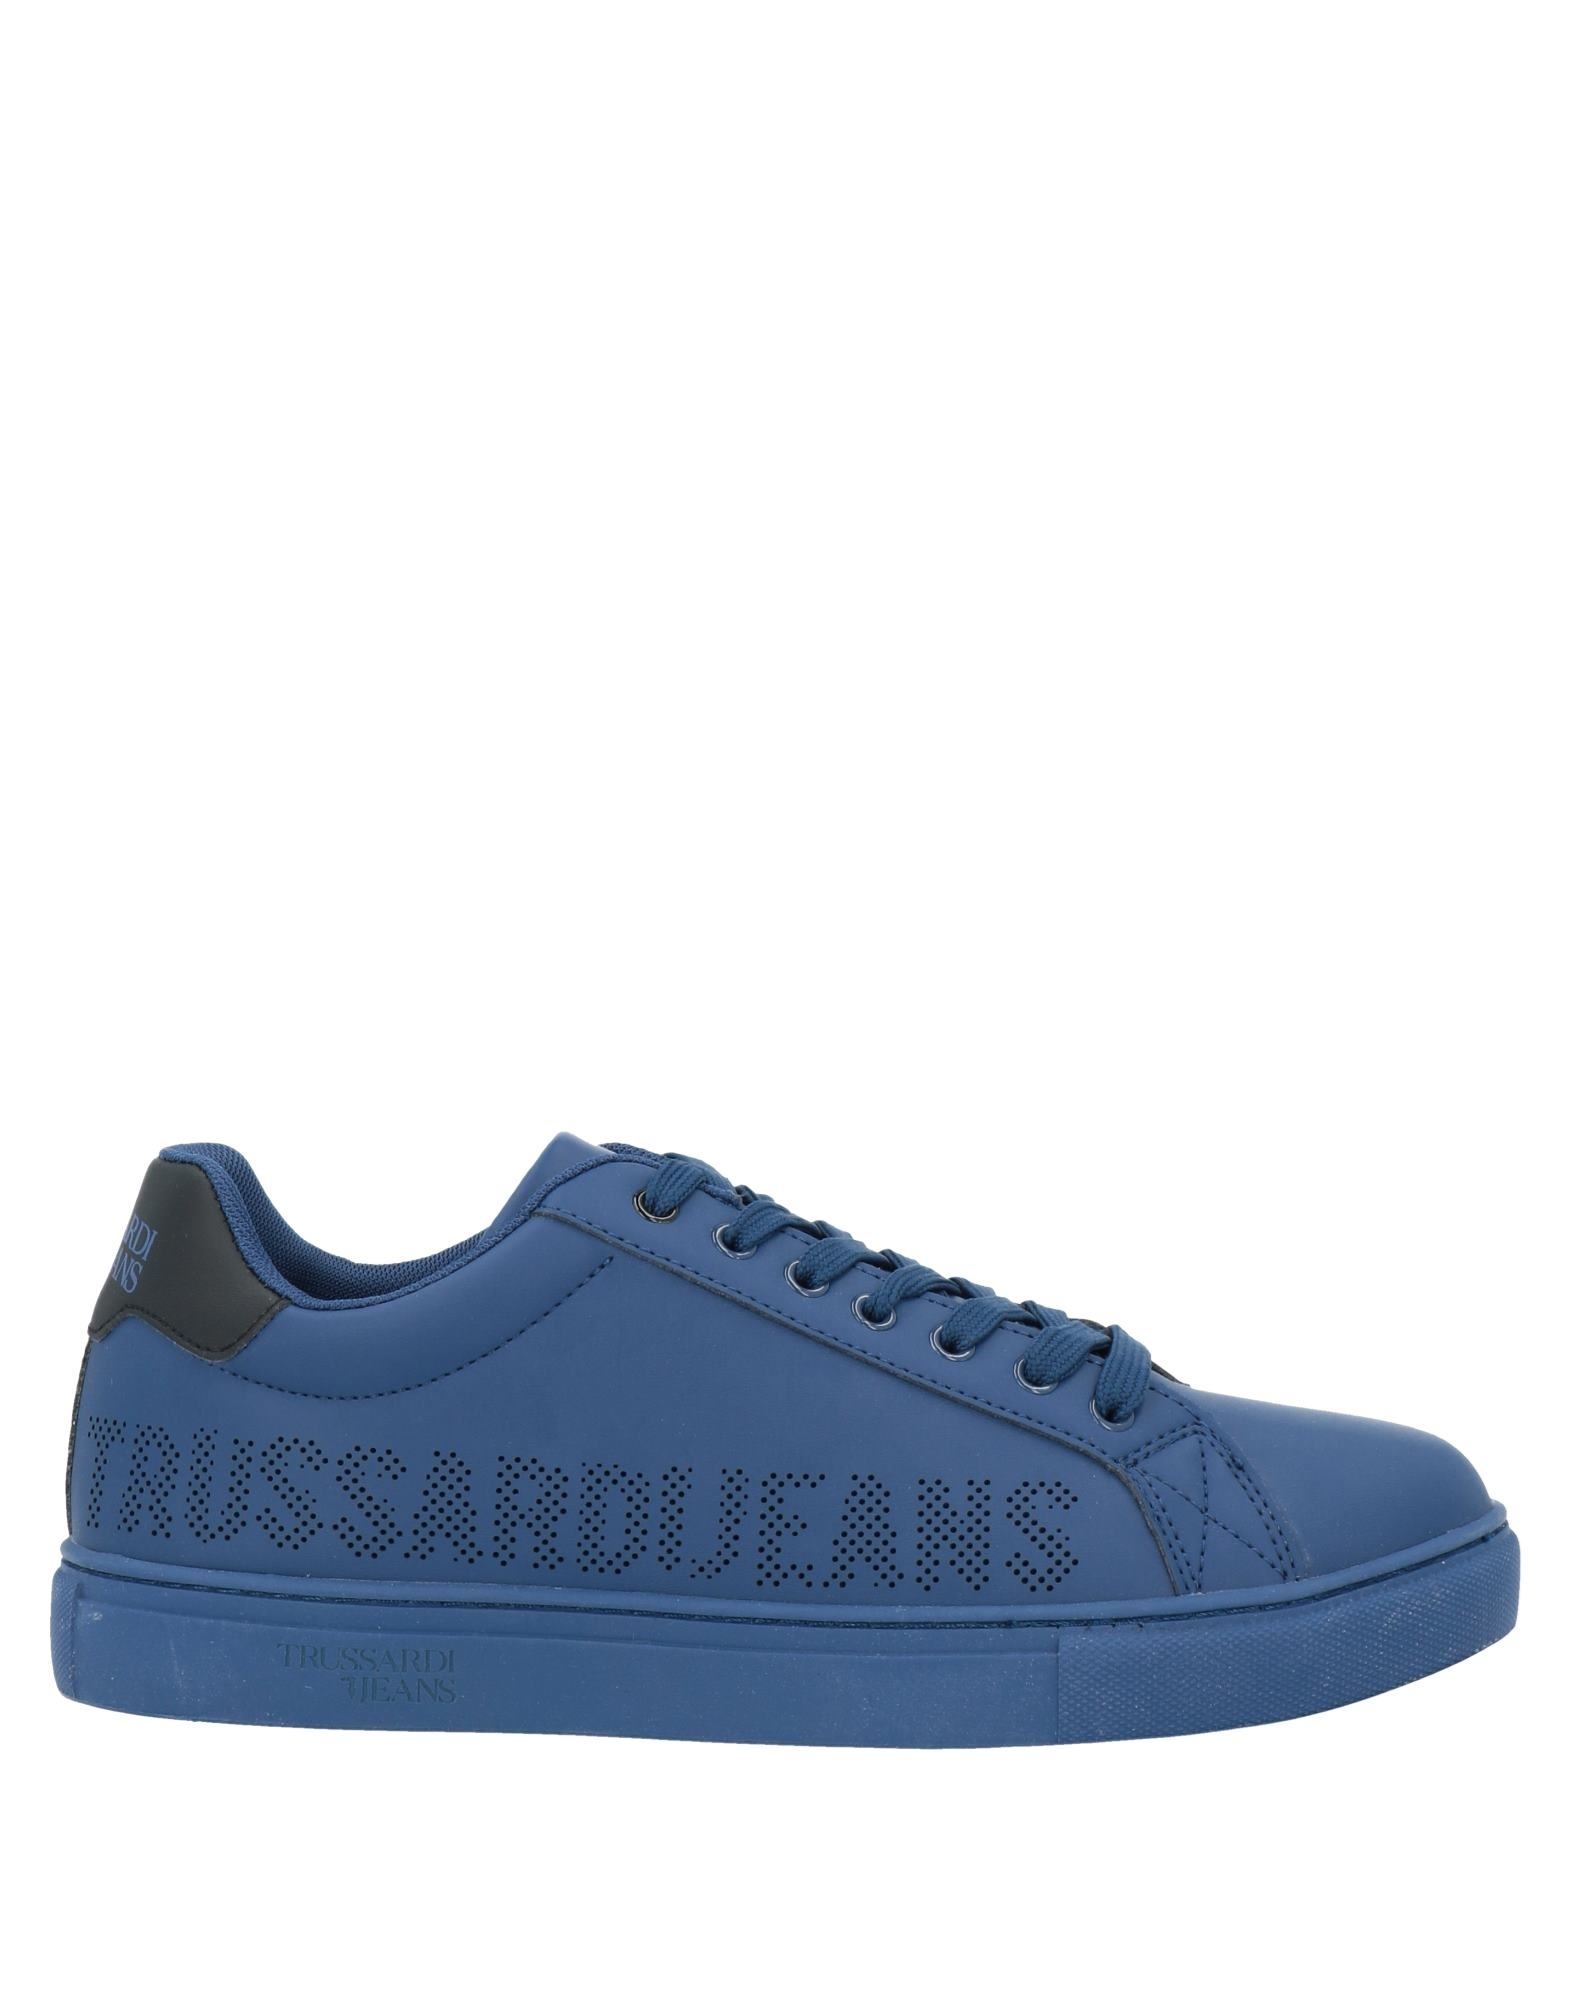 TRUSSARDI JEANS Sneakers Herren Blau von TRUSSARDI JEANS